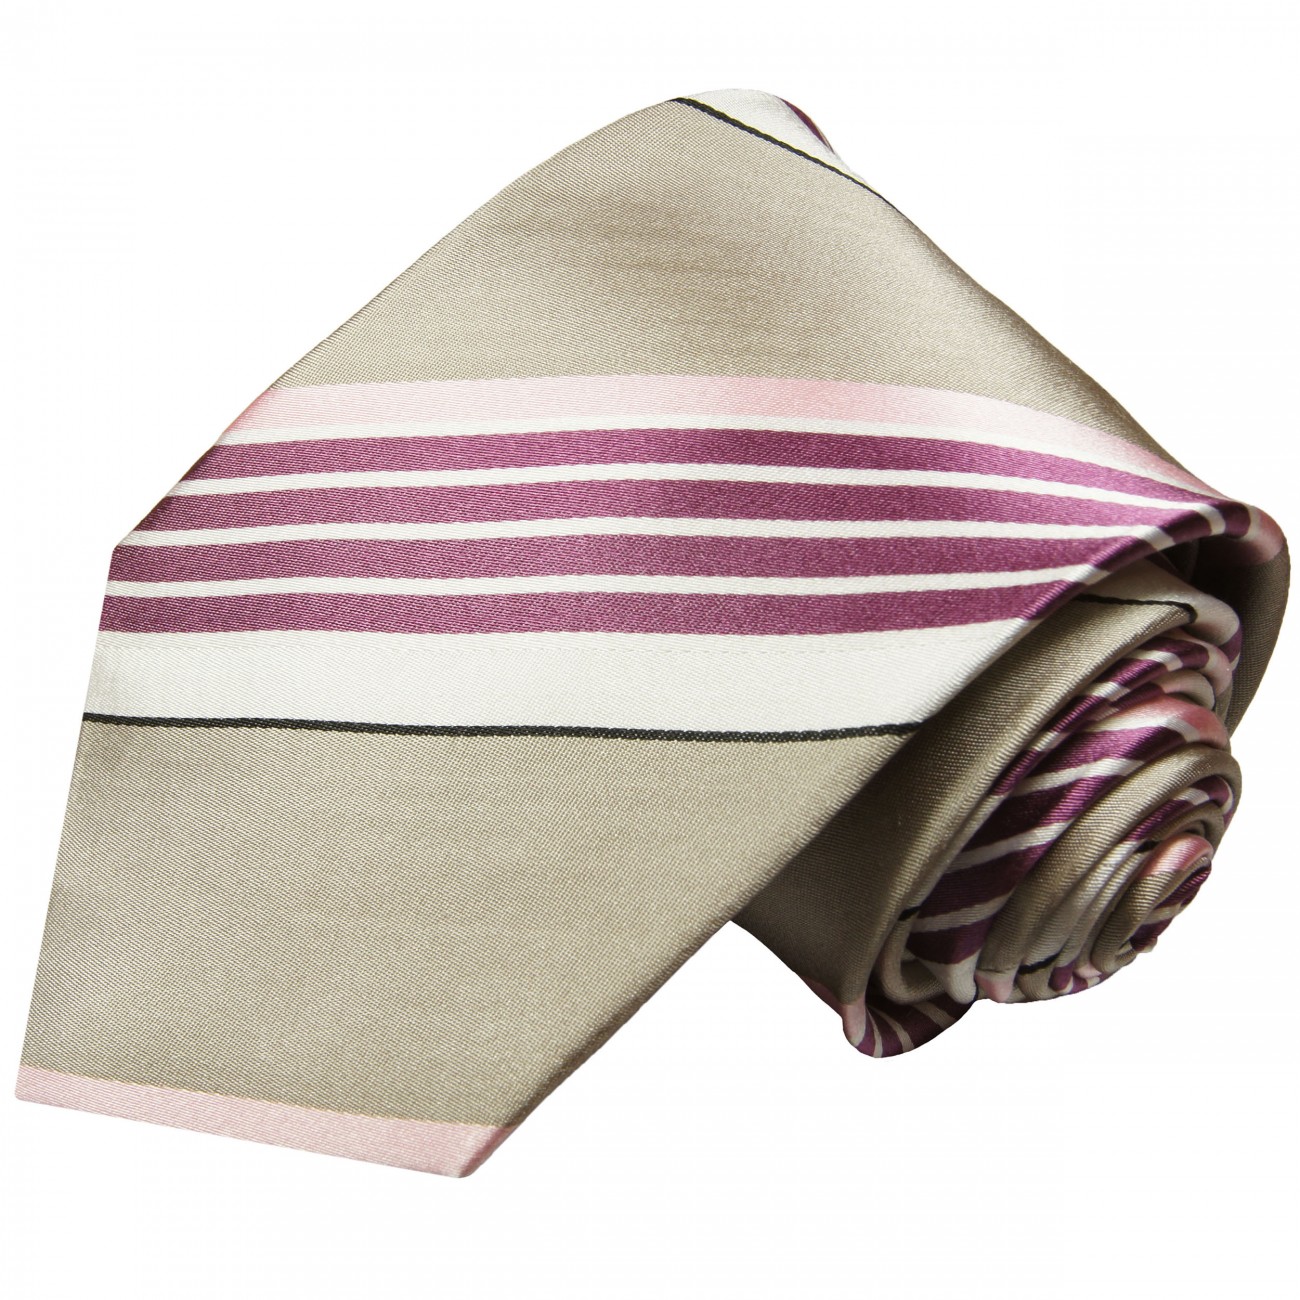 Extra lange Krawatte 165cm - Krawatte Überlänge - pink grau gestreift